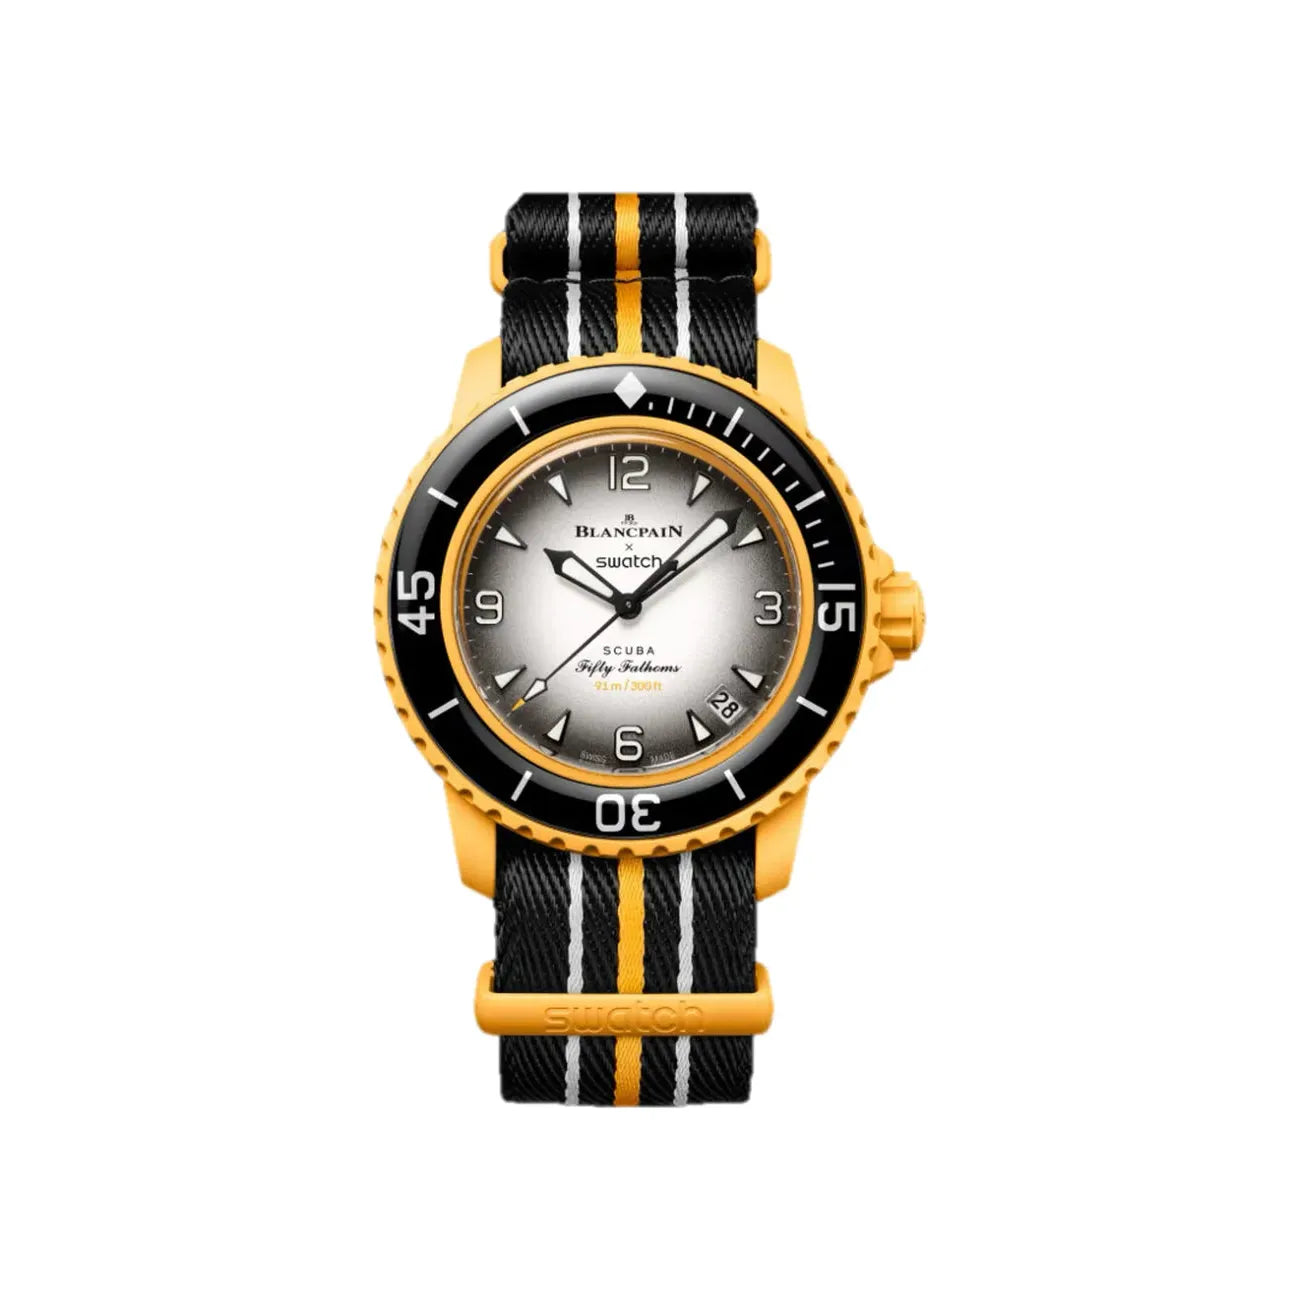 Swatch X Blancpain Bioceramic Scuba Fifty Fathoms Watch - Pacific Ocean Black & Yellow